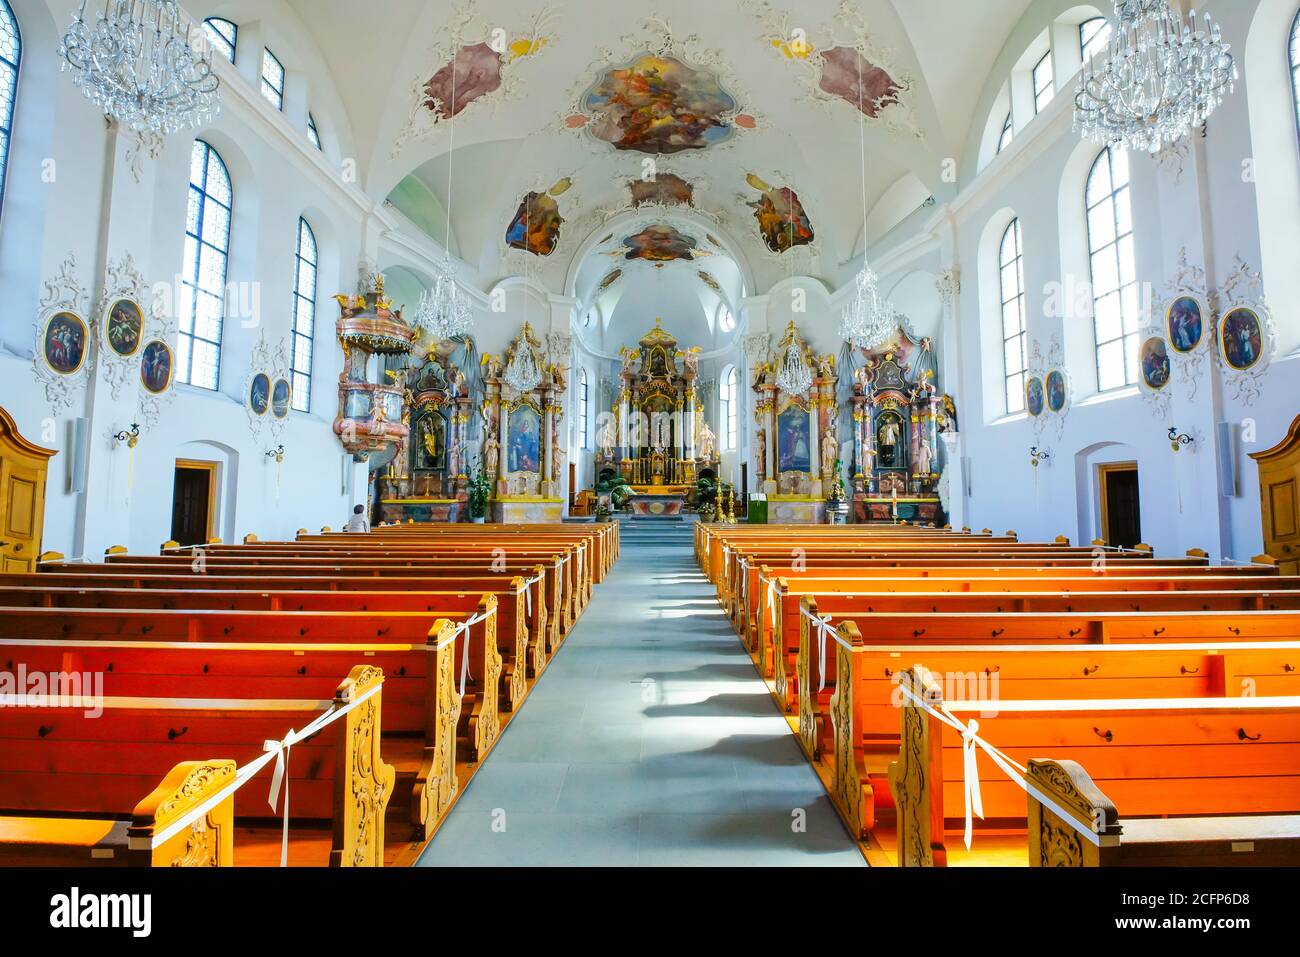 Beautiful interior of St. Martin Catholic church in Hochdorf village, canton of Lucerne, Switzerland. Stock Photo